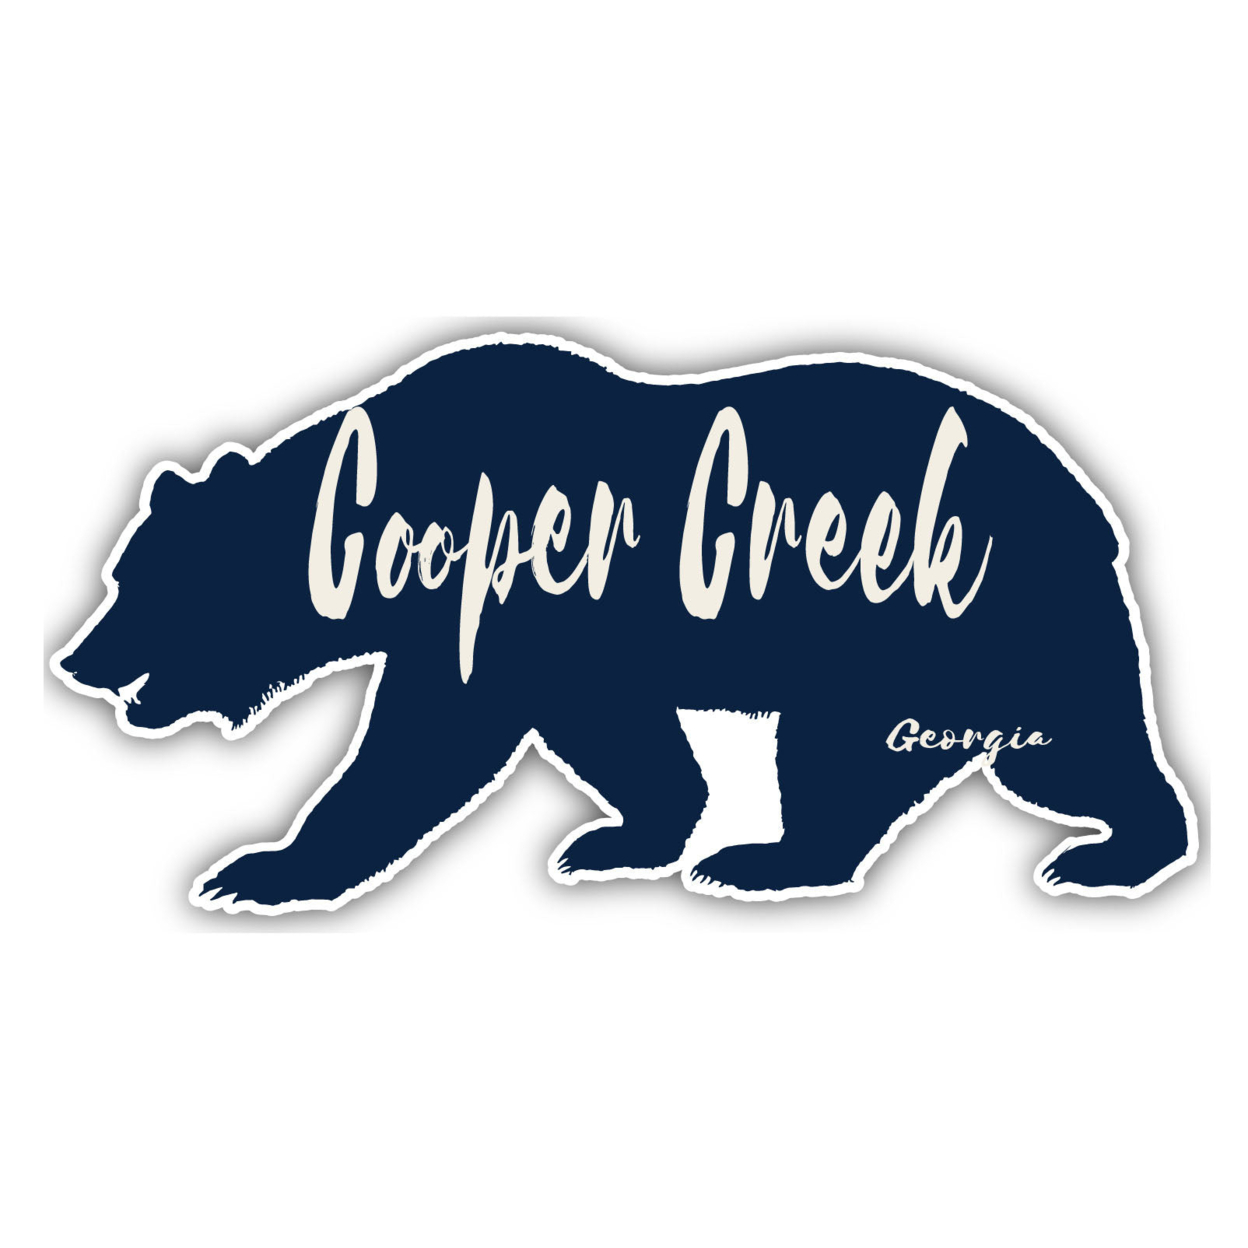 Cooper Creek Georgia Souvenir Decorative Stickers (Choose Theme And Size) - Single Unit, 6-Inch, Bear